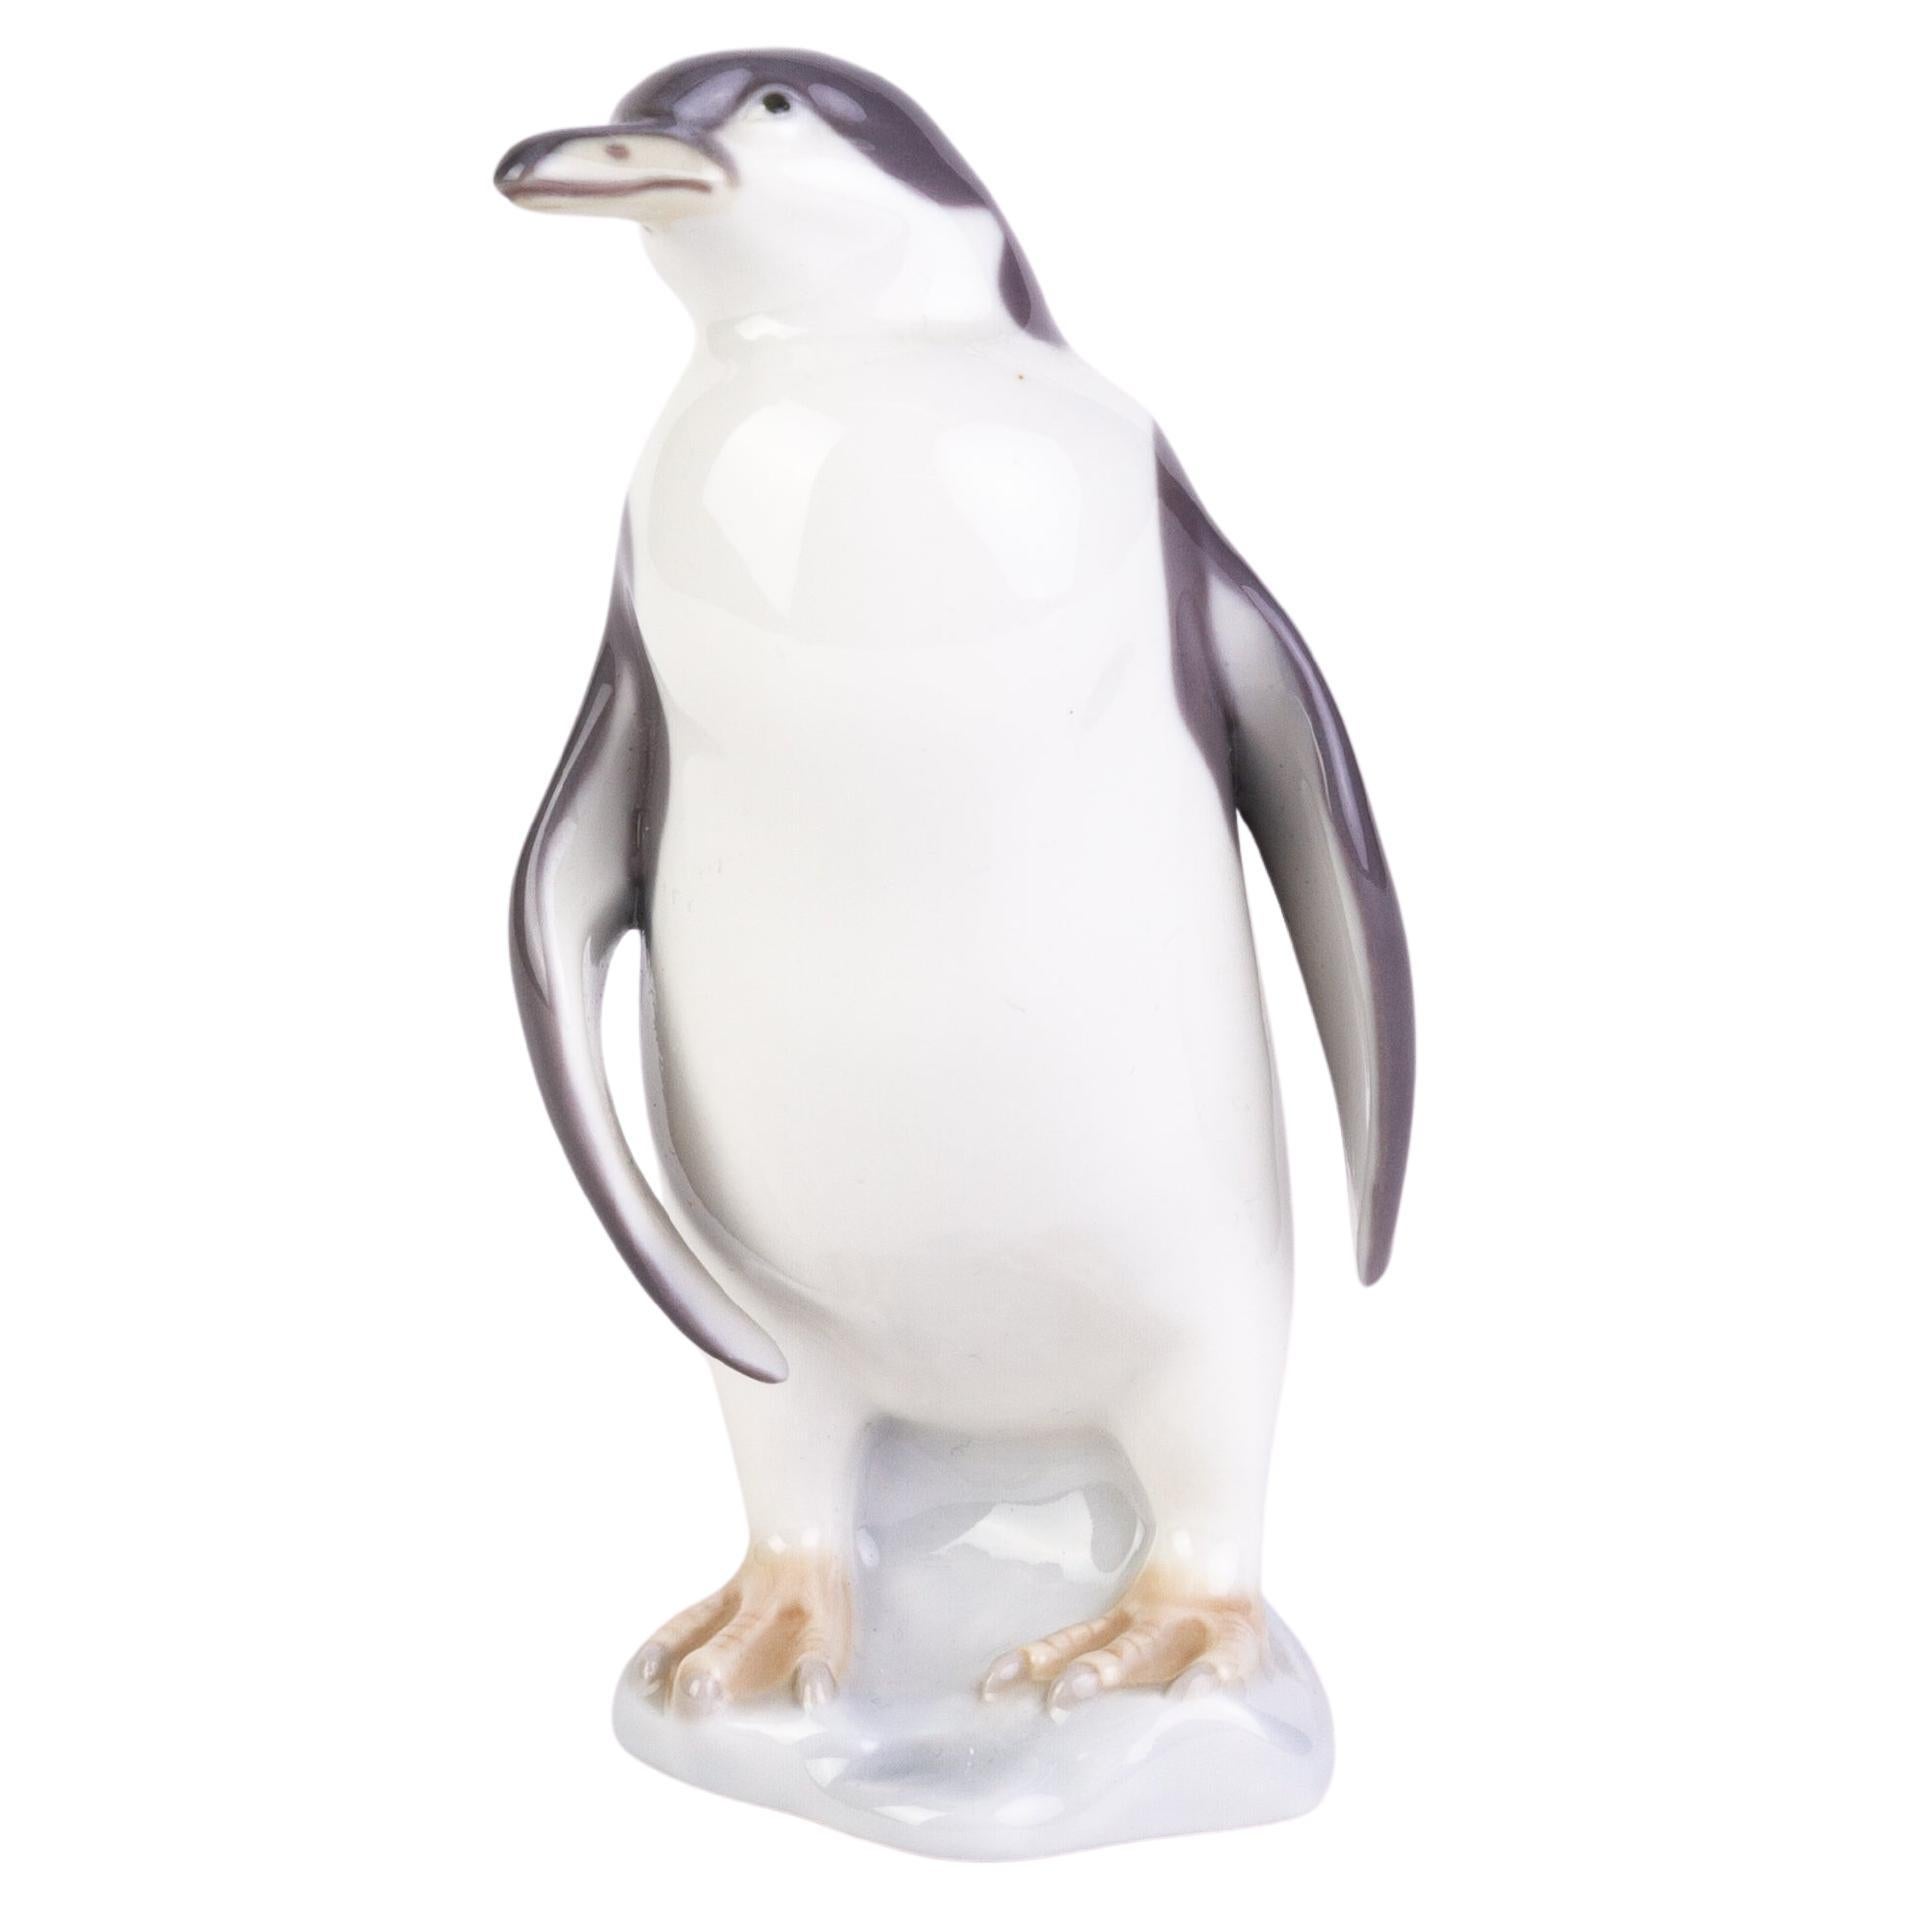 Retired Lladro Fine Porcelain Sculpture Figure Group "Penguin" 5249 For Sale